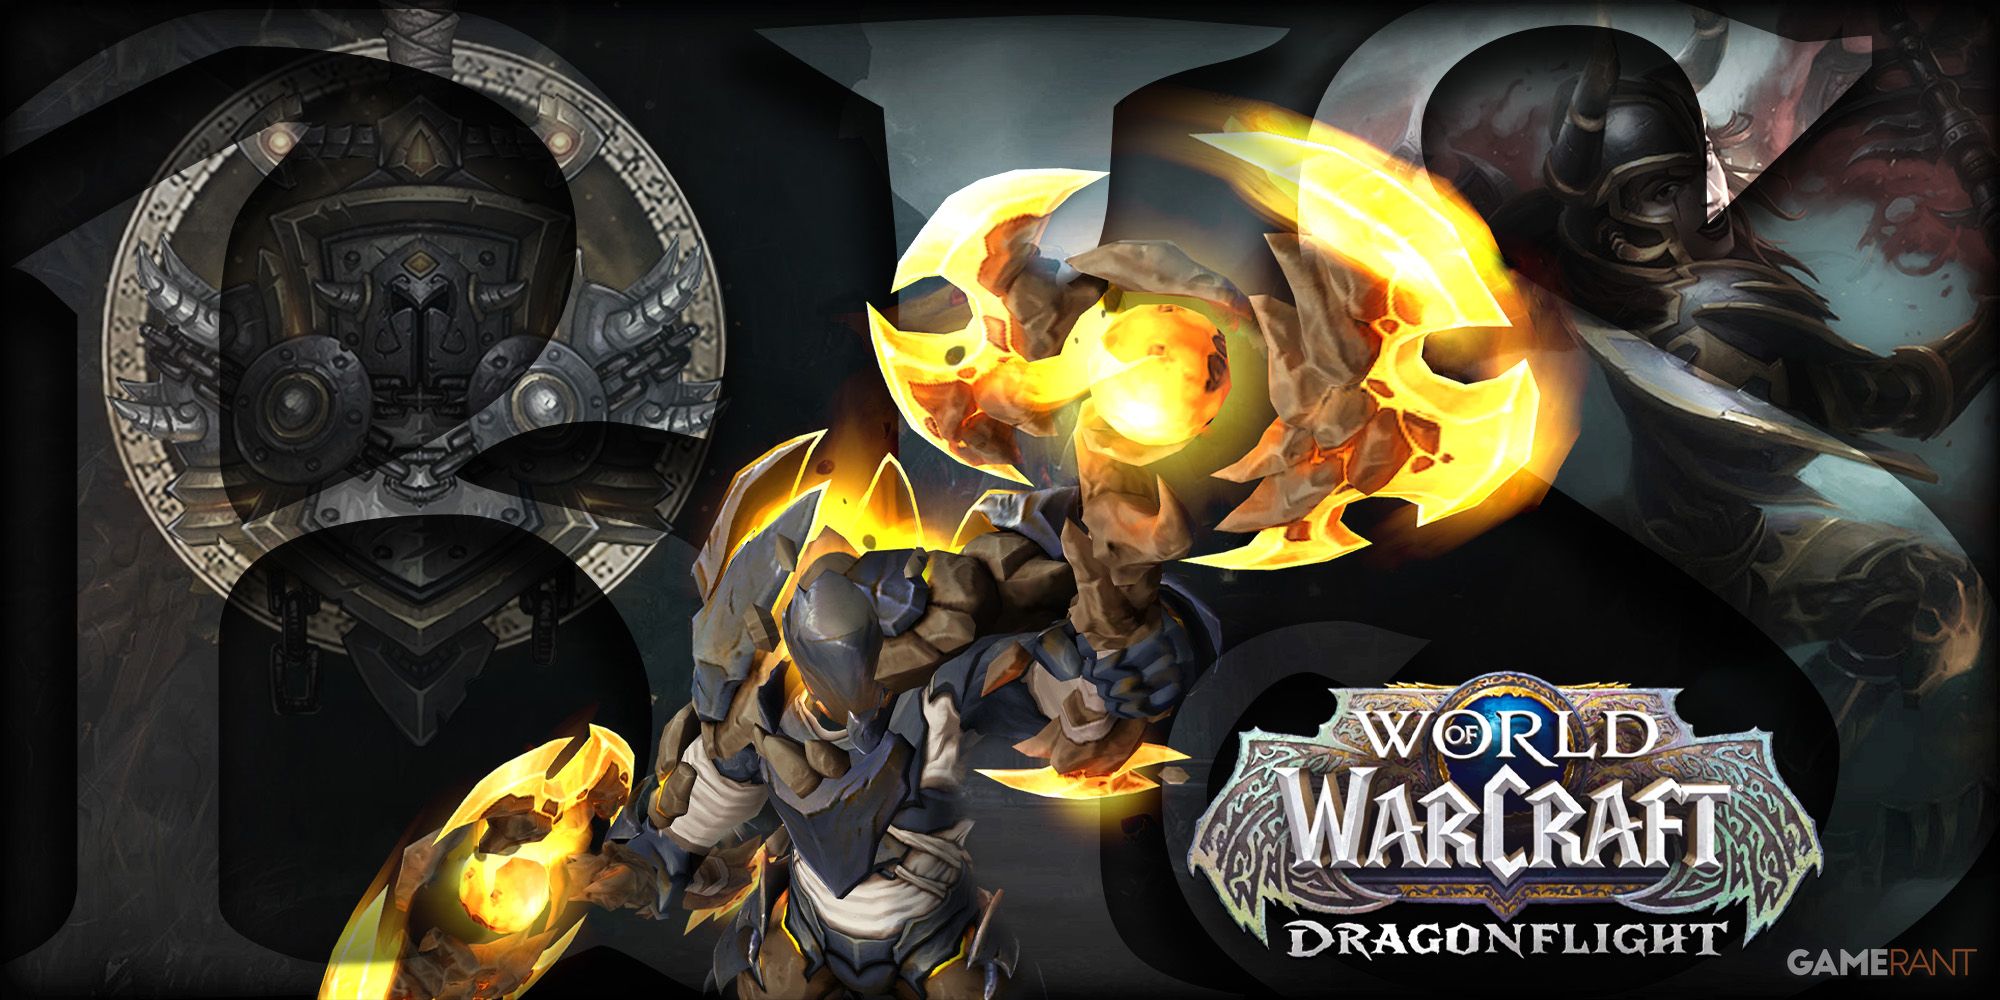 Warrior Season 2 Dragonflight Tier Set Bonuses Reviewed - Guide